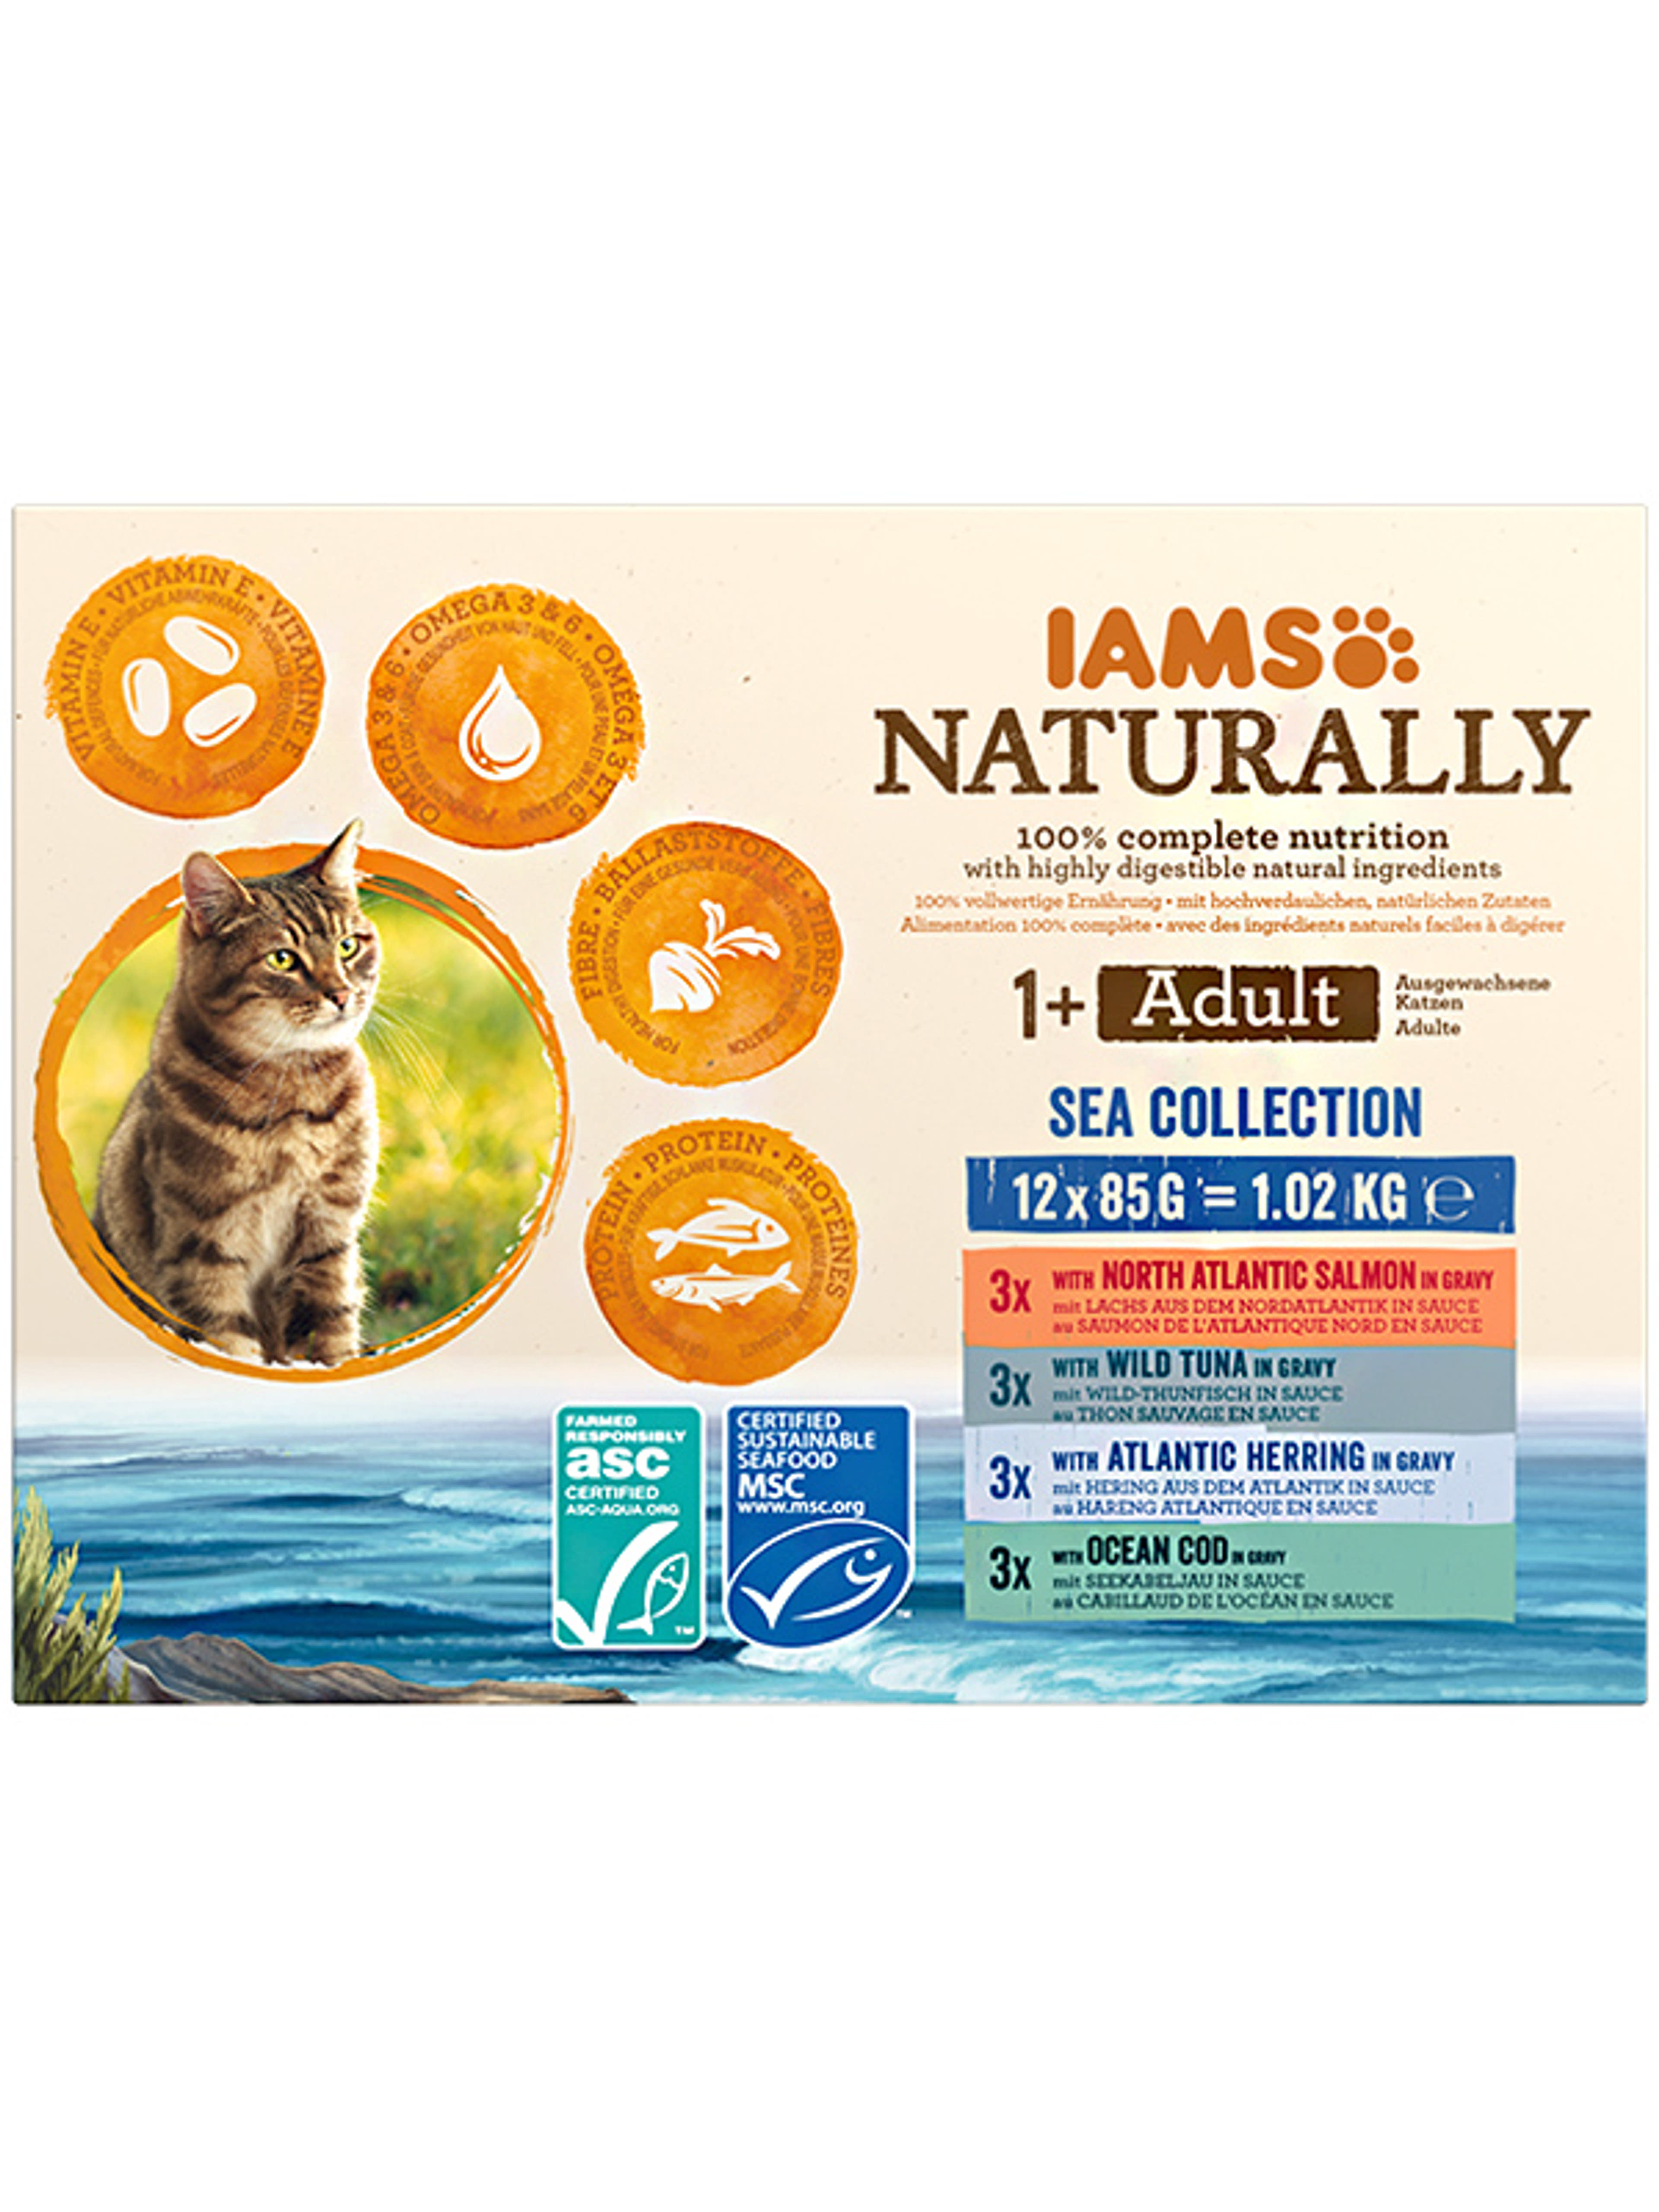 IAMS Naturally alutasak macskáknak, tengeri hal 12x85g - 1020 g-1